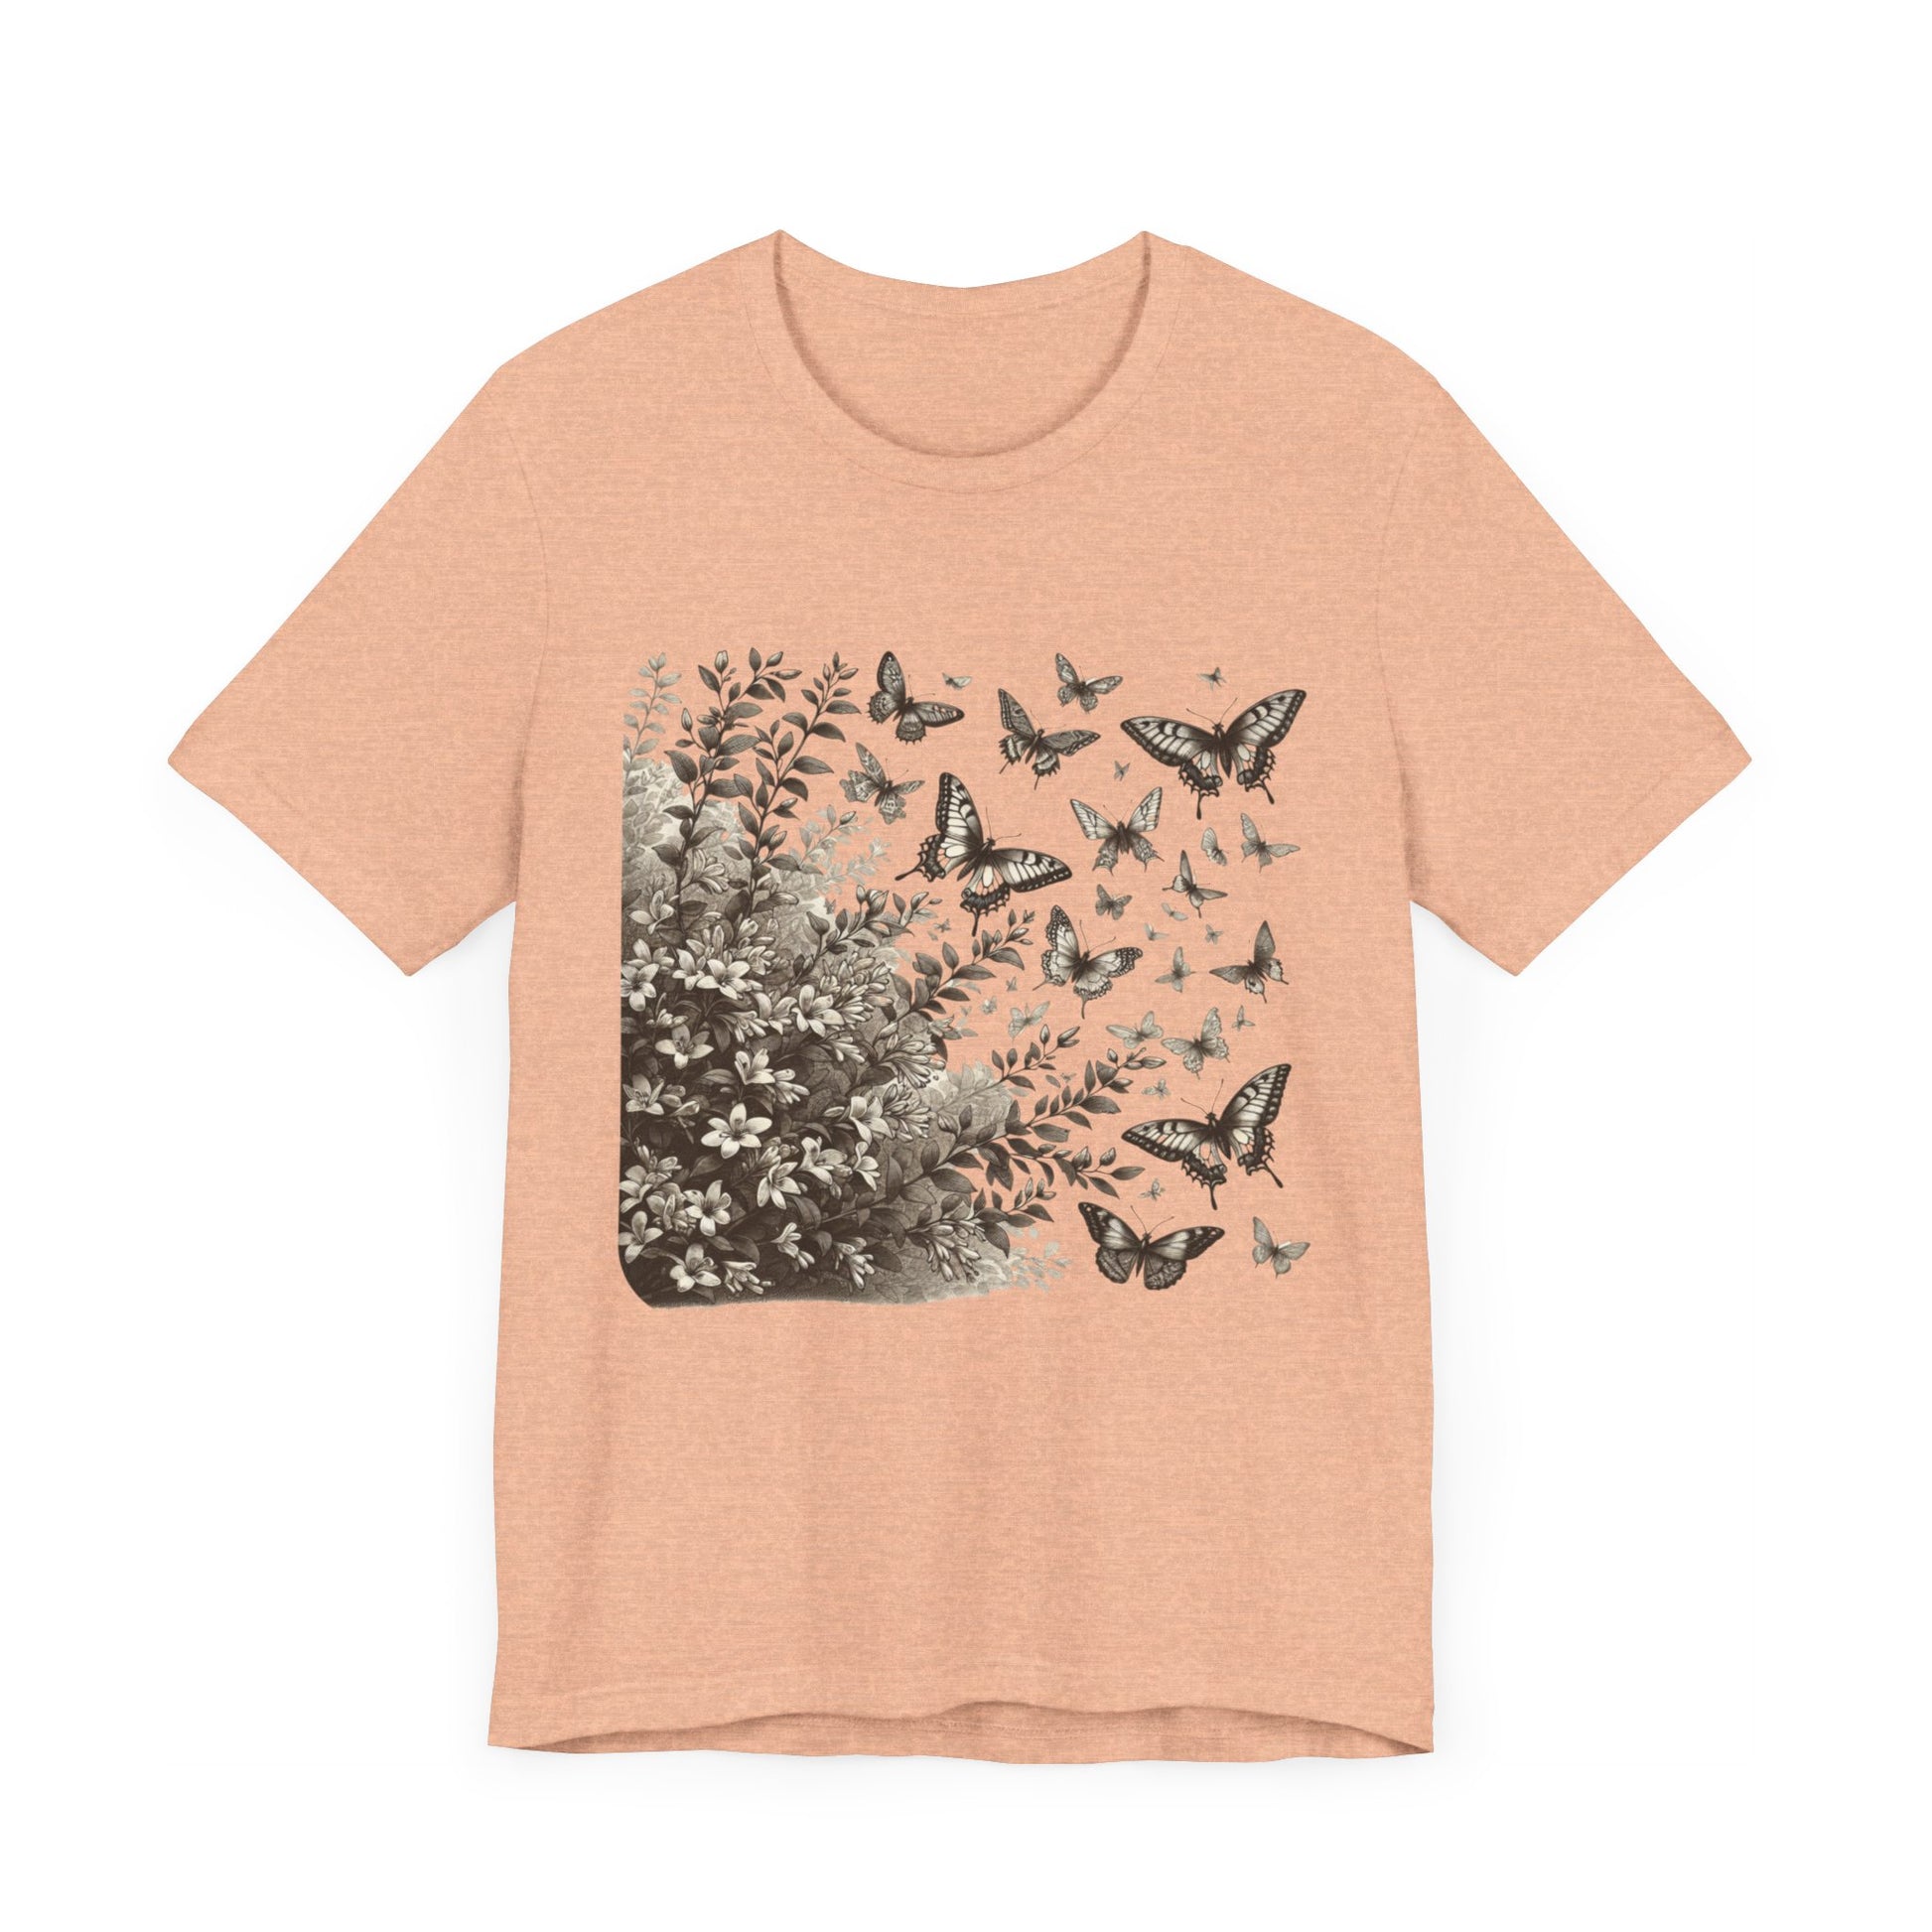 Butterflies and Abelia Trees T-shirt - Tortuna